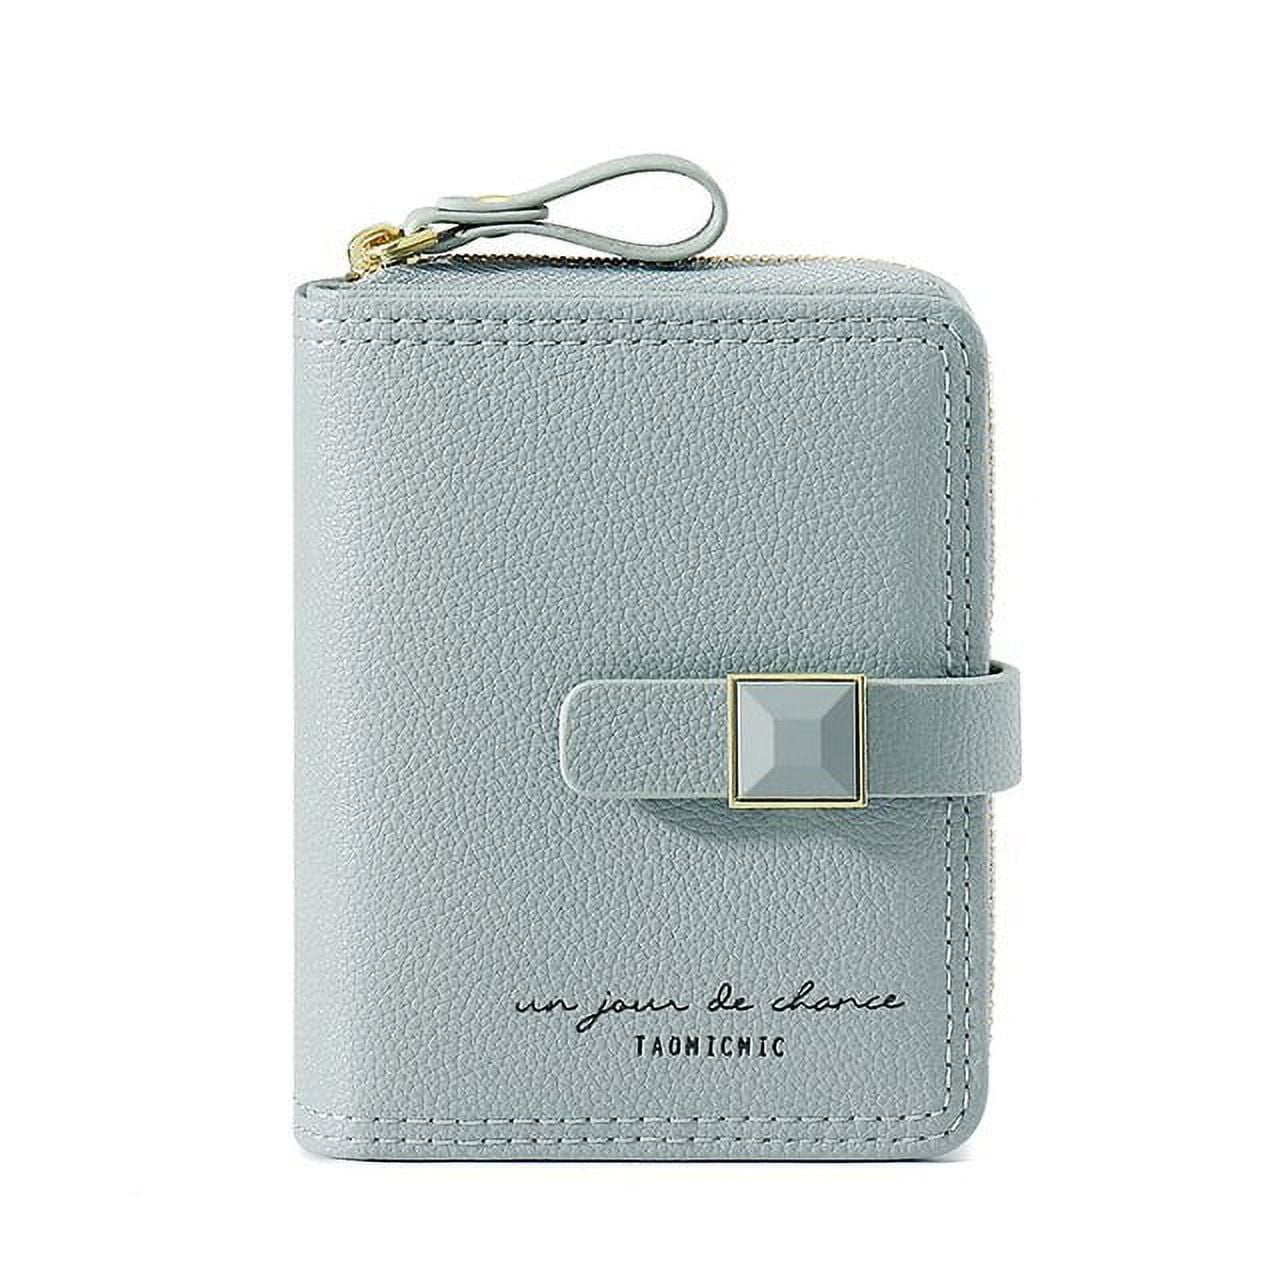 QWZNDZGR Designer Wallets Famous Brand Women Wallet Lady Short Handbag  Portable Bag Coin ID Card Bag PU Leather Wallet Hot Selling